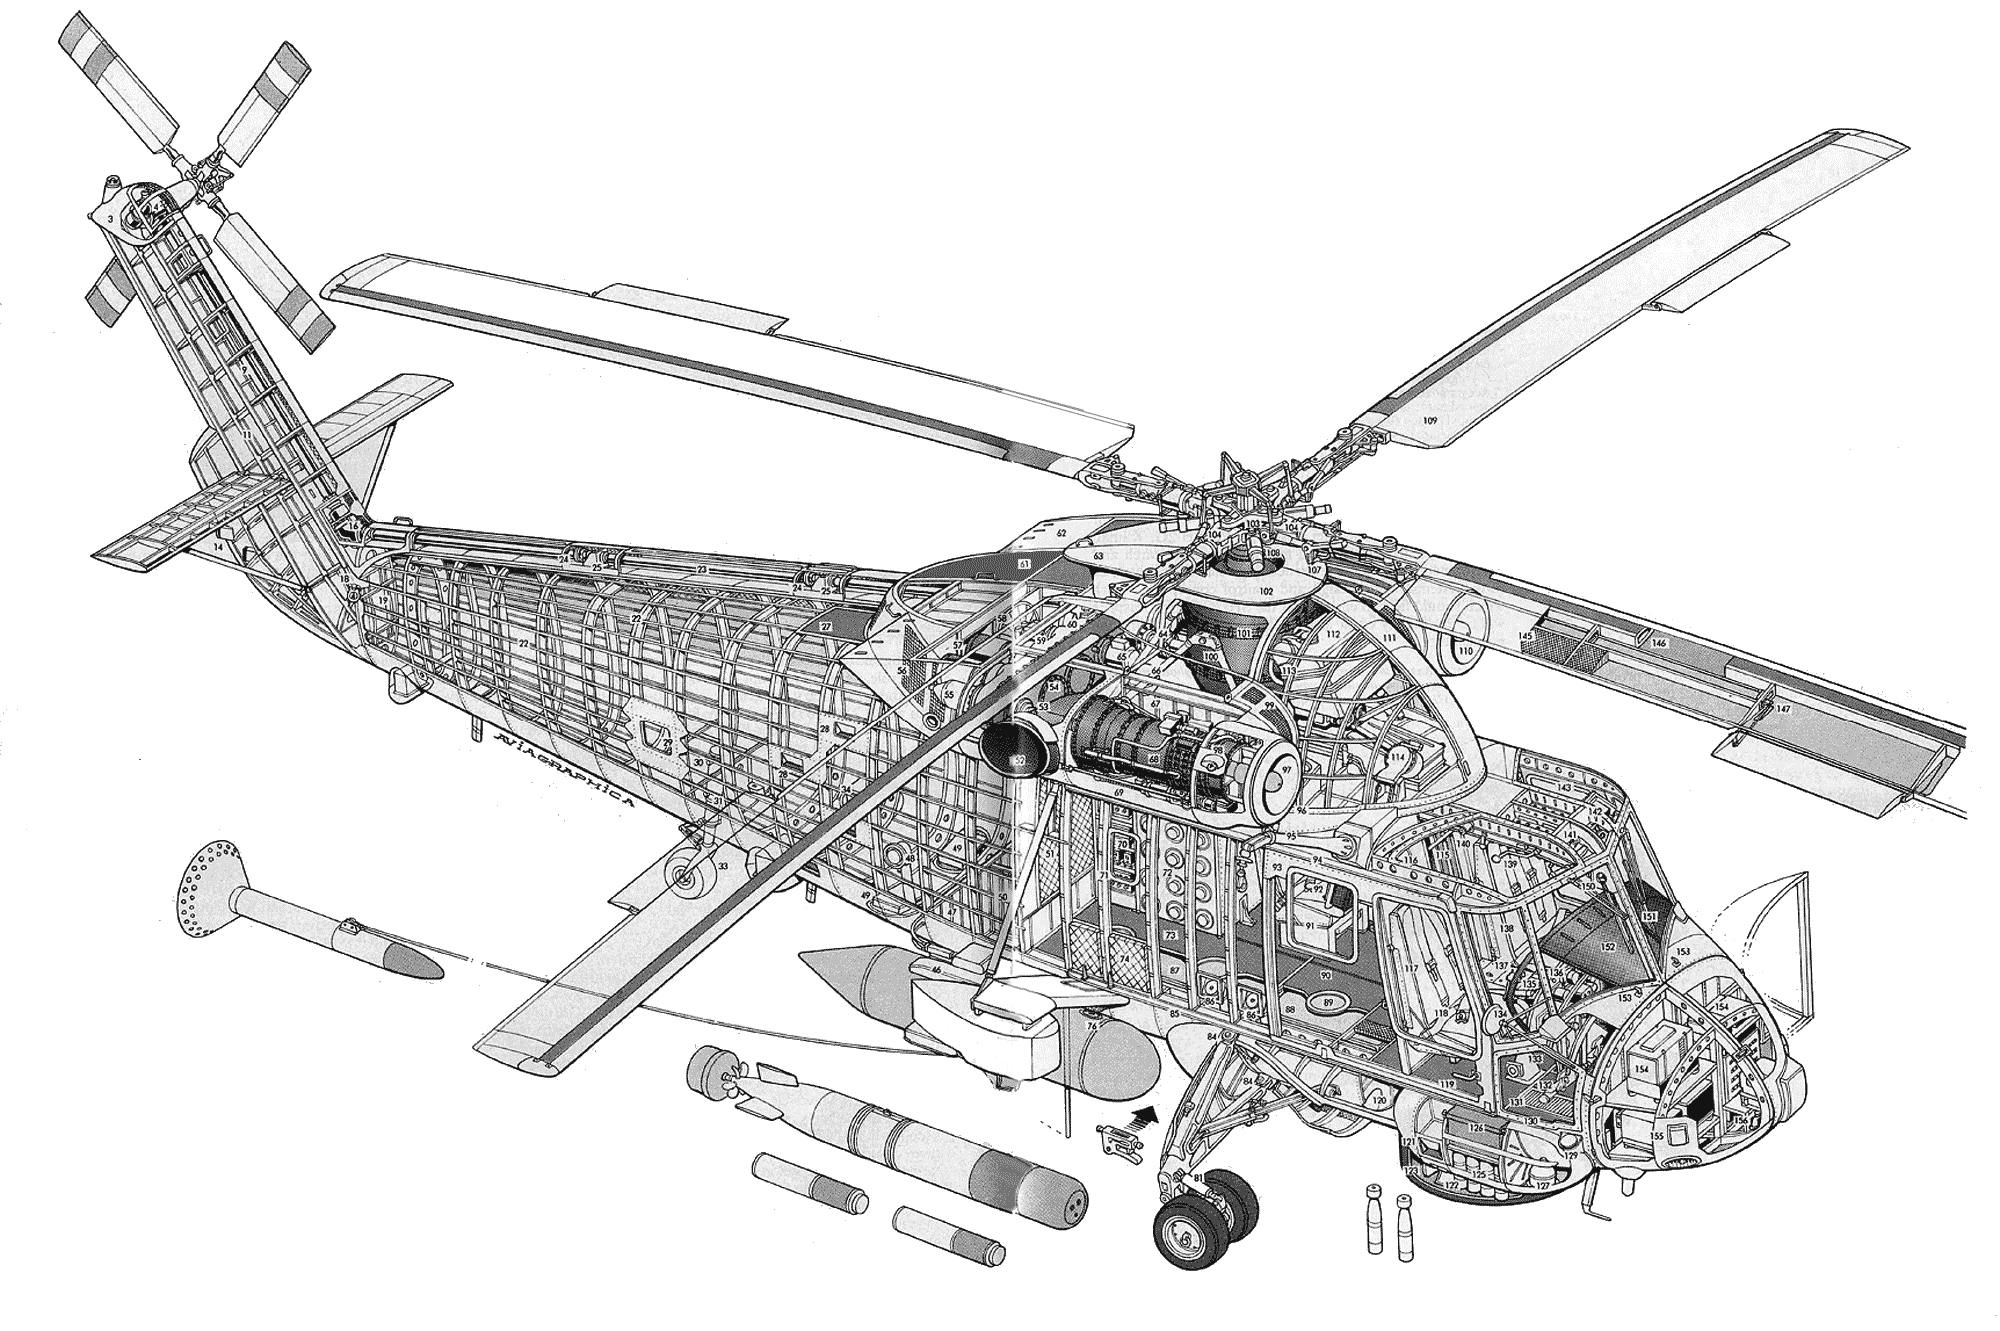 Kaman SH-2 Seasprite cutaway drawing